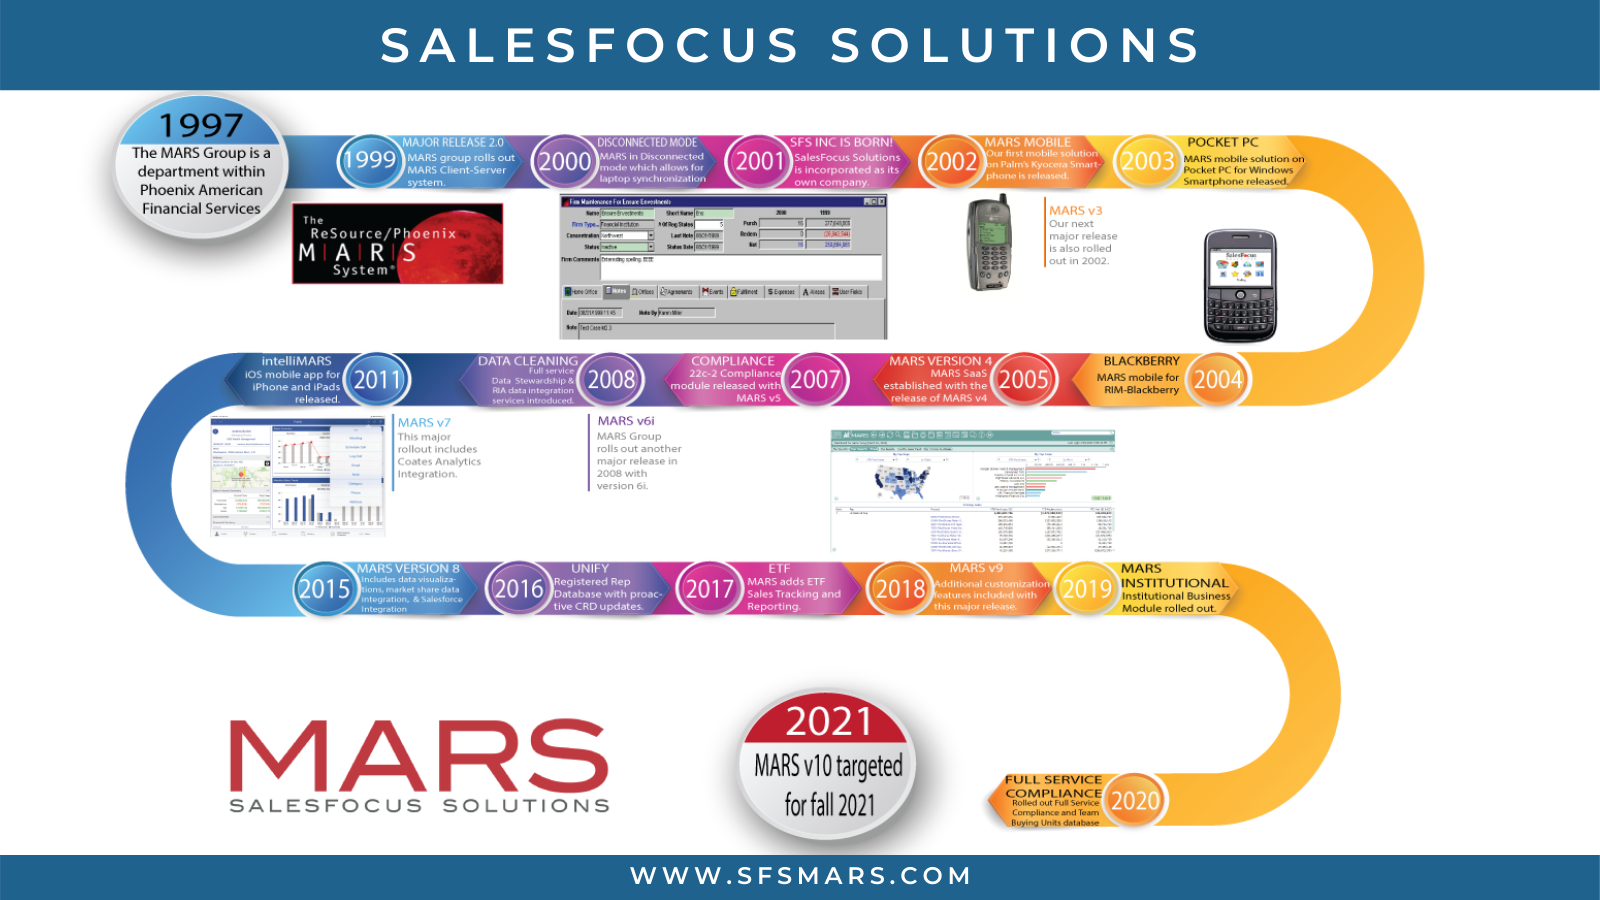 mars salesfocus solutions for mac pc